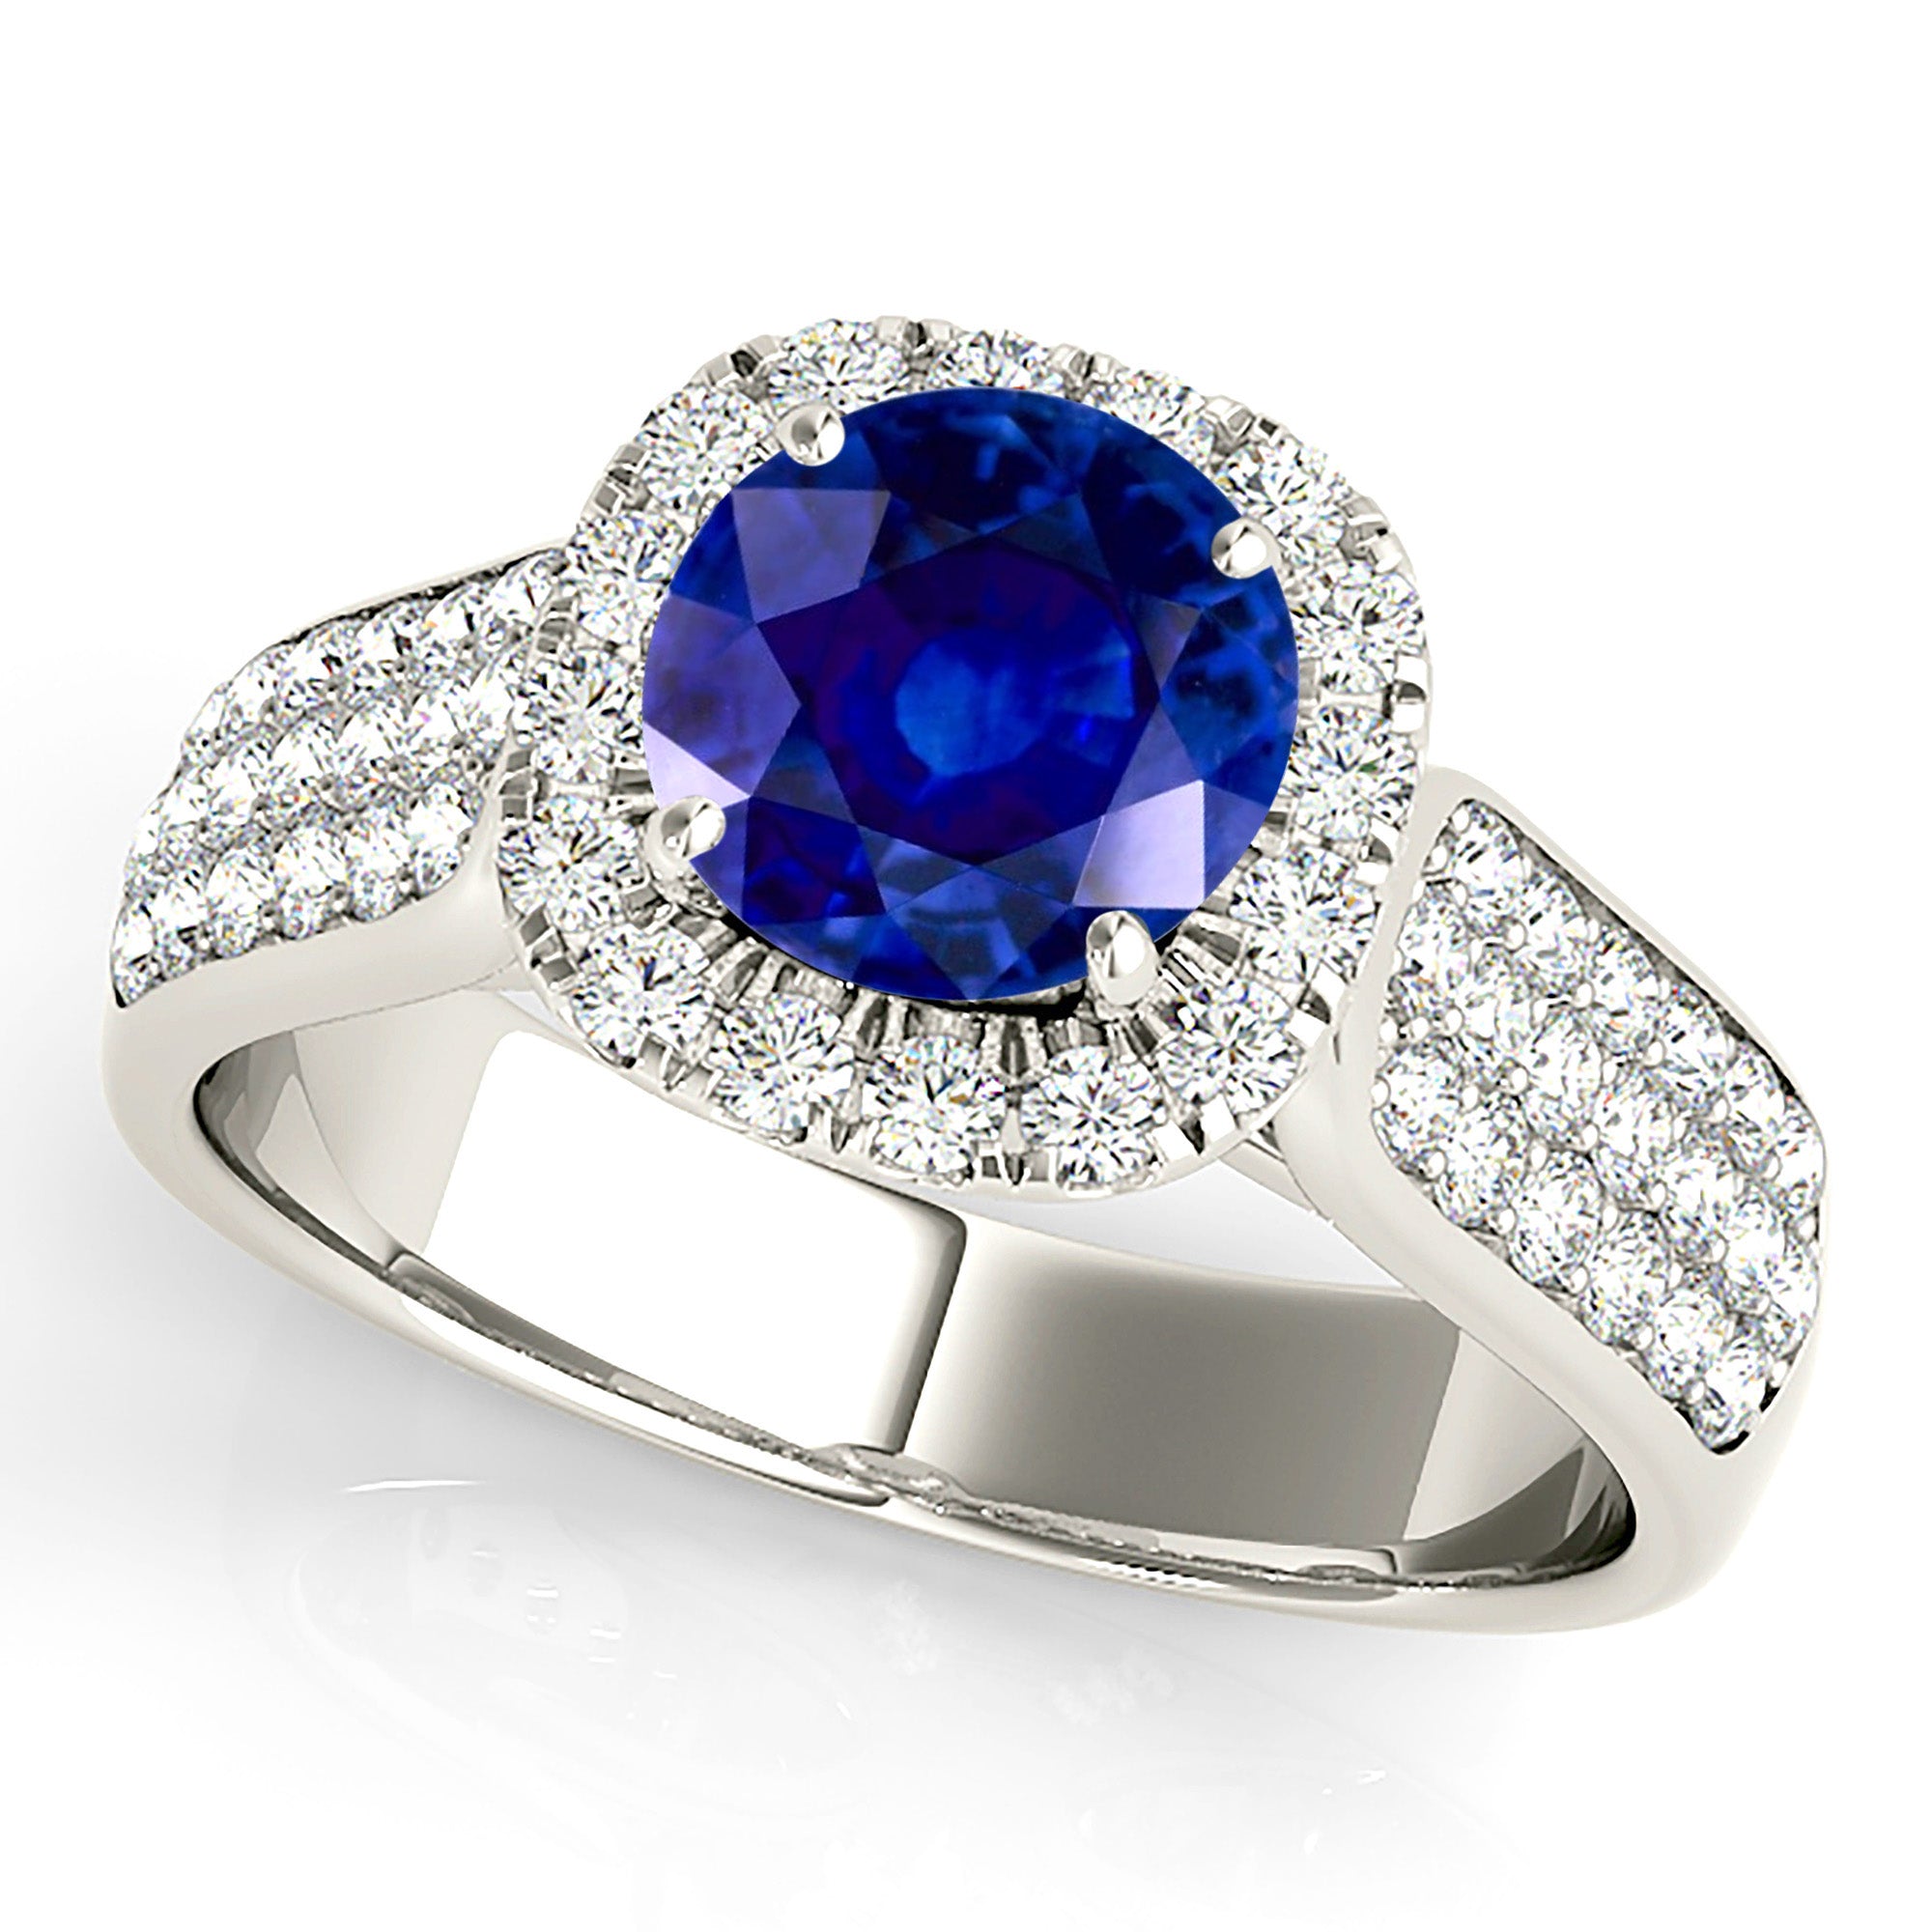 1.35 ct. Genuine Blue Round Sapphire Ring With 0.75 ctw. Diamond Cushion Halo, Triple Row Diamond Band | Natural Sapphire And Diamond Ring-in 14K/18K White, Yellow, Rose Gold and Platinum - Christmas Jewelry Gift -VIRABYANI